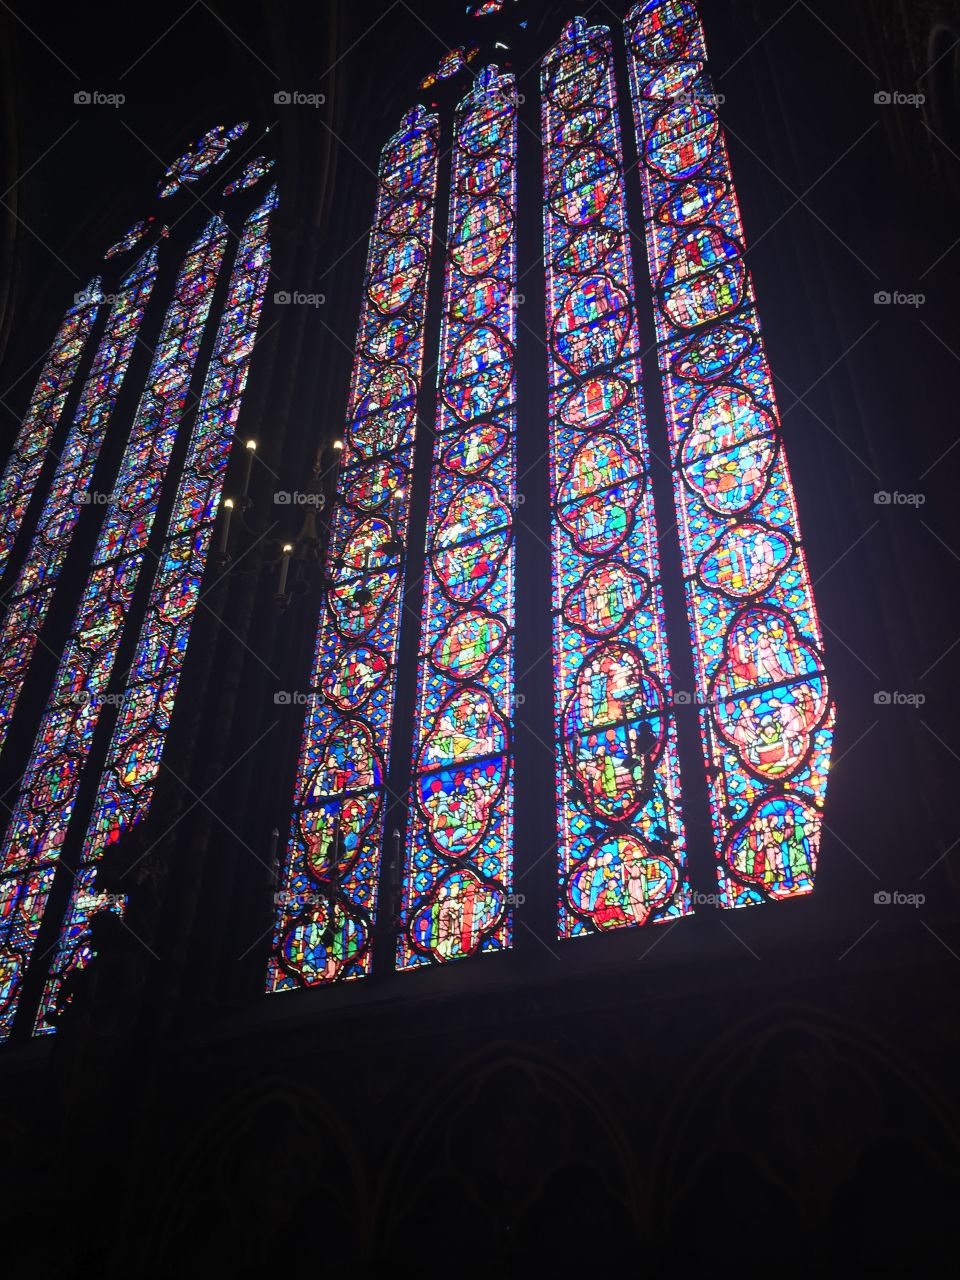 Colorful stained glass windows inside Sainte Chapelle Paris France 